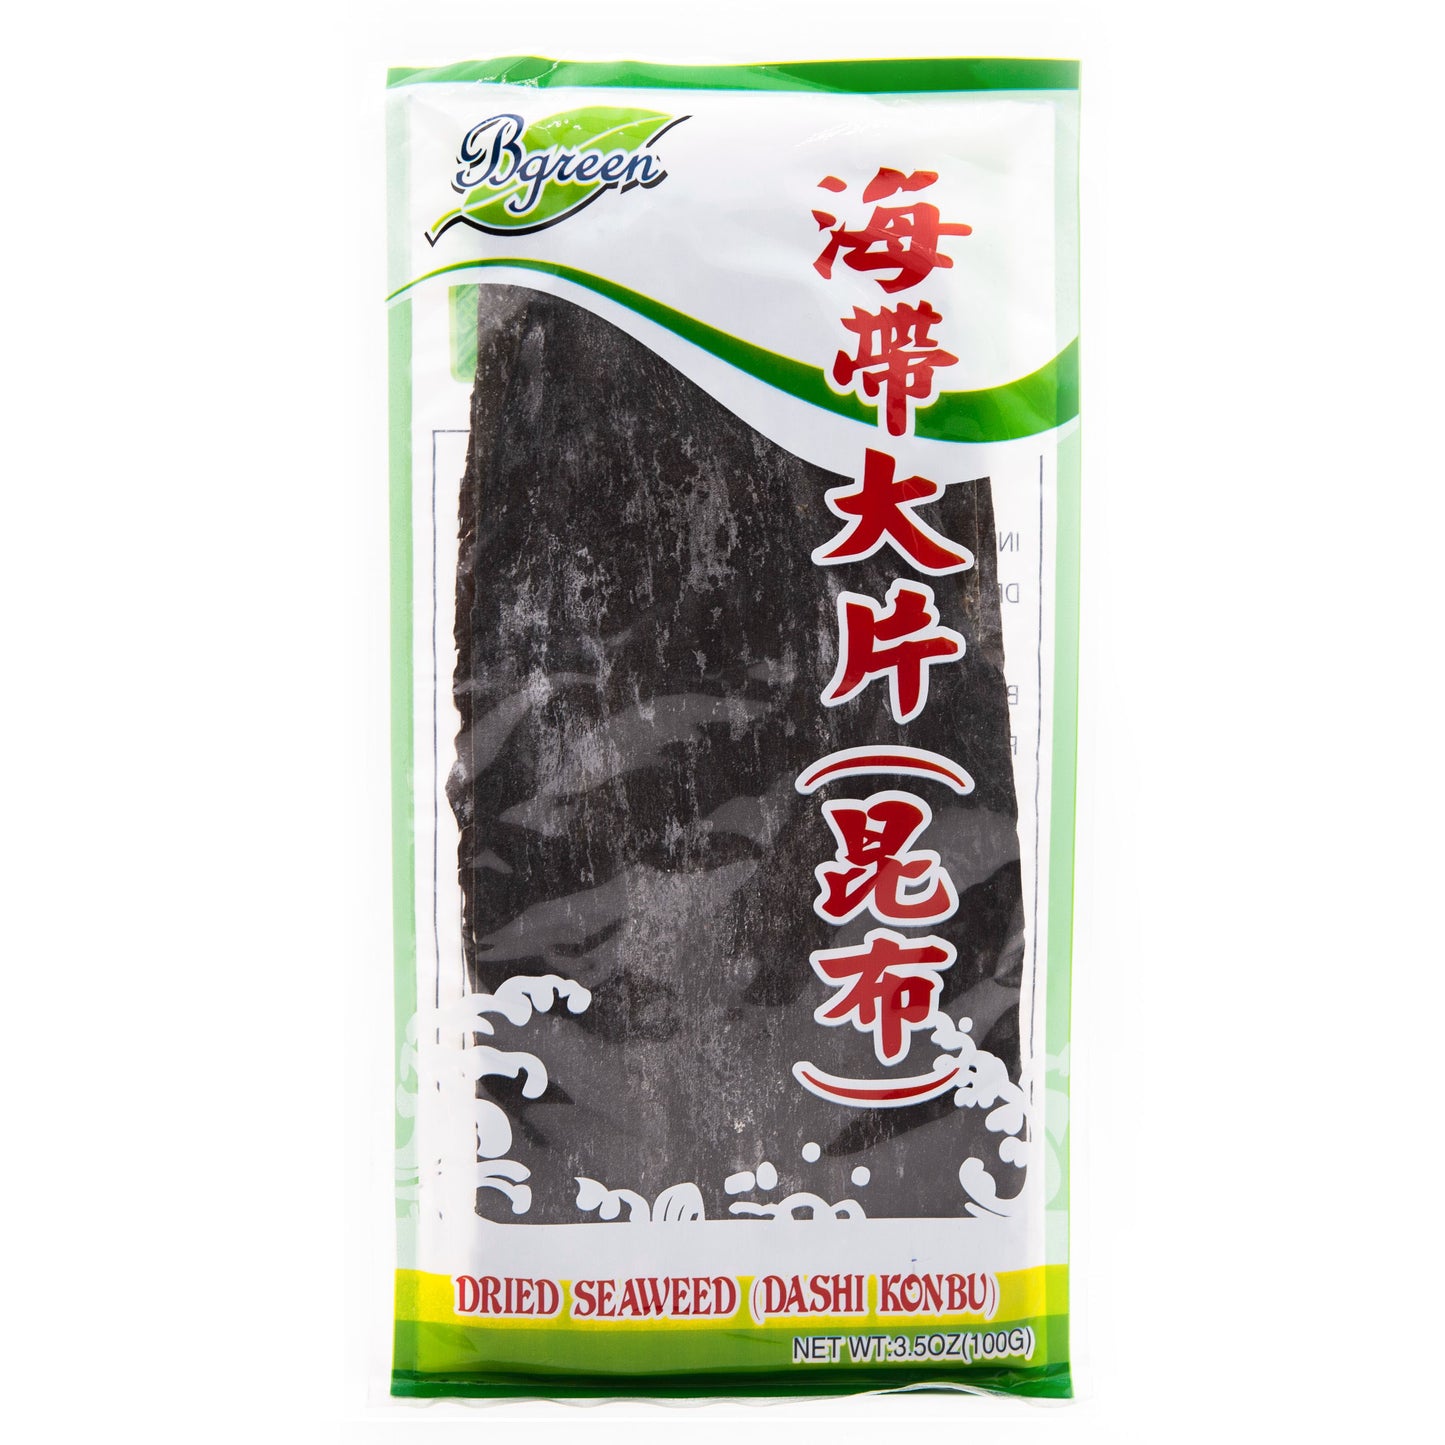 Dried Seaweed (Dashi Konbu) Bgreen 海帶大片